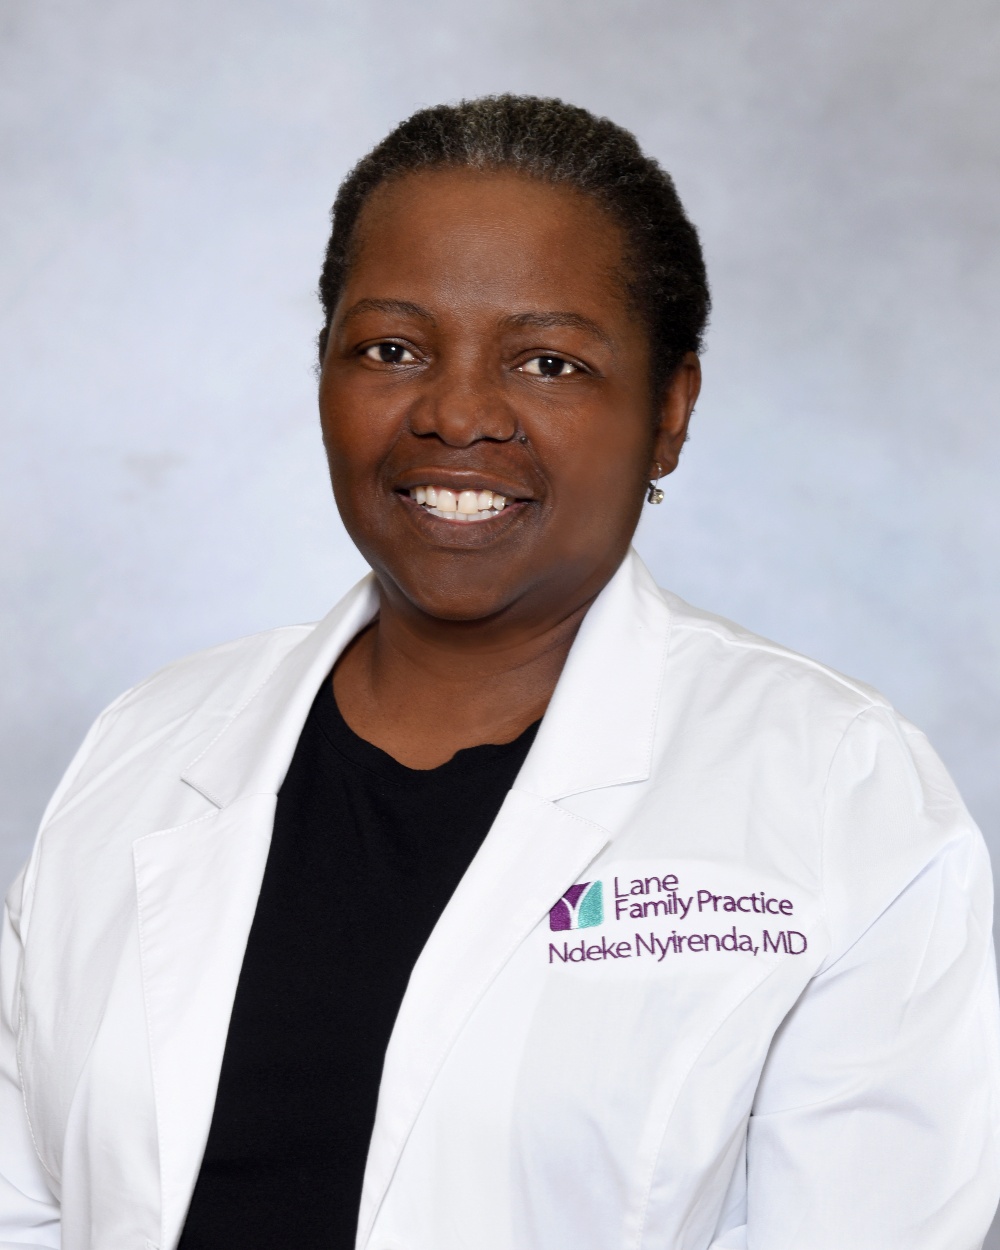 Dr. Nydeke Nyirenda Joins Lane Family Practice